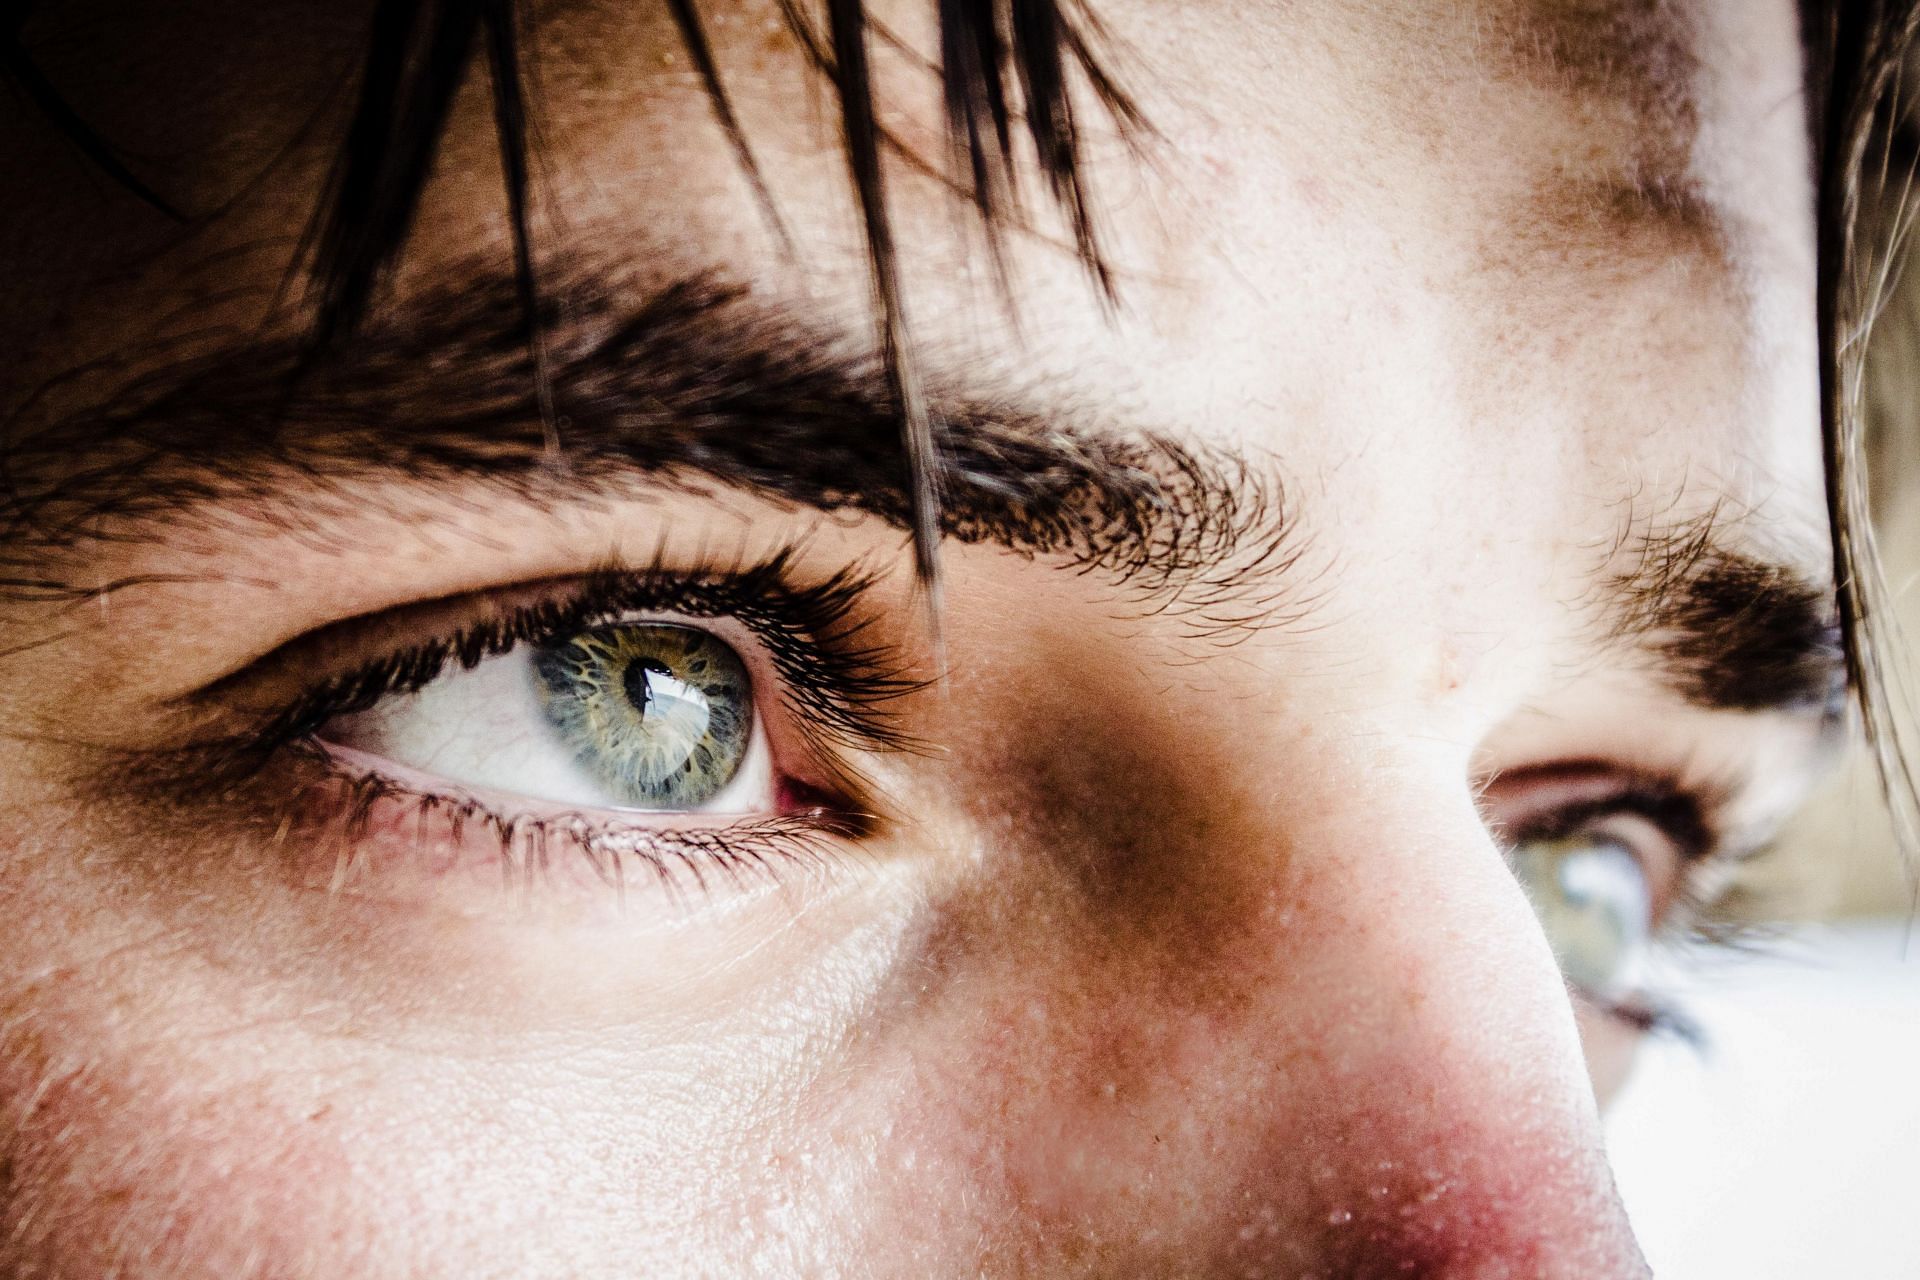 Hooded eyes (Image via Unsplash/Quinten De Graaf)